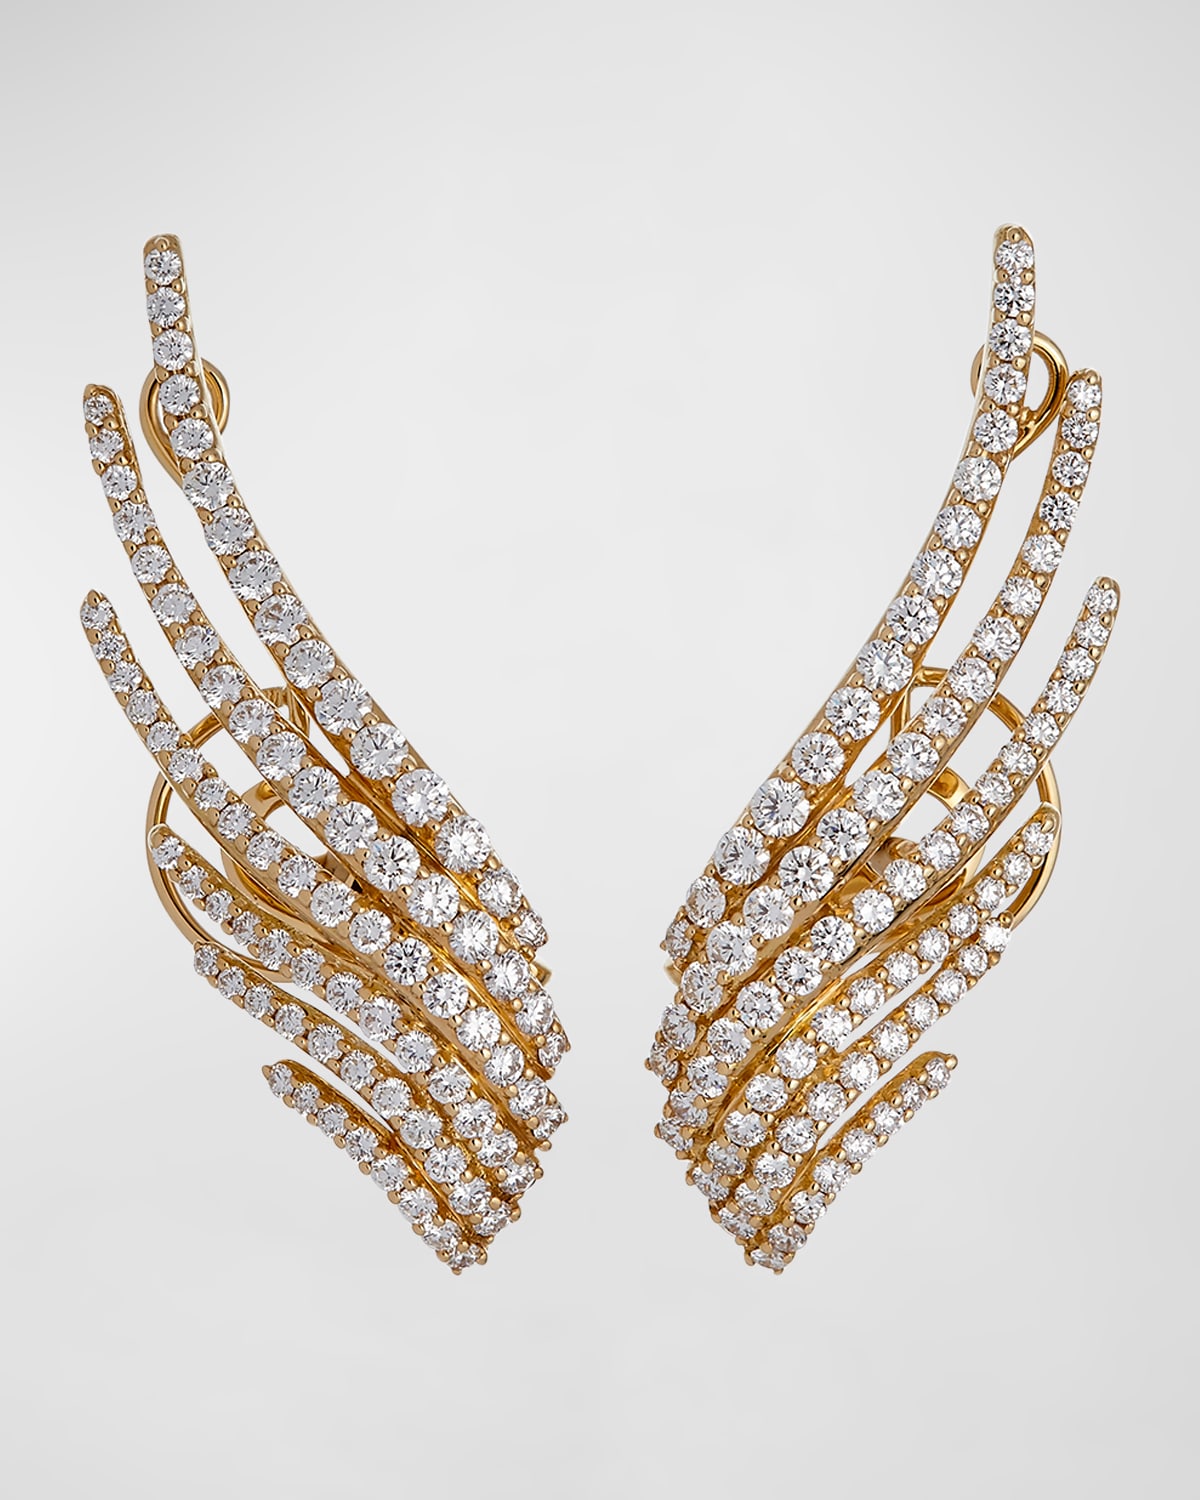 18K Yellow Gold Multi Row Earrings with Diamonds